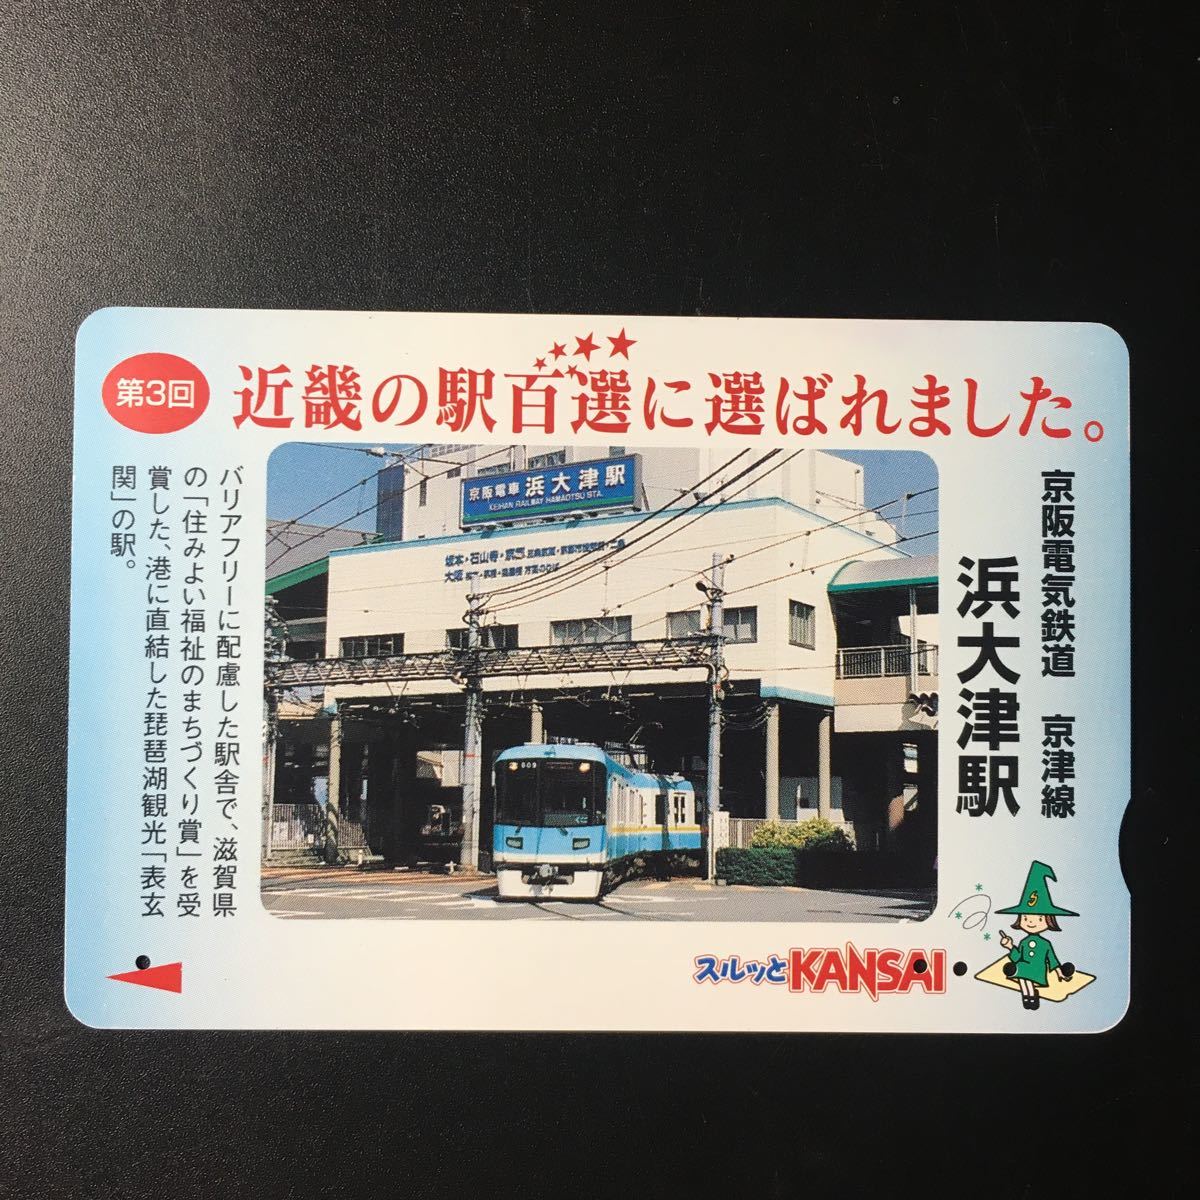  capital ./ all-purpose card - no. 3 times Kinki. station 100 selection [. large Tsu station ]-2003 year ticket . machine sale beginning pattern - capital . Surutto KANSAI K(ka) do( used )